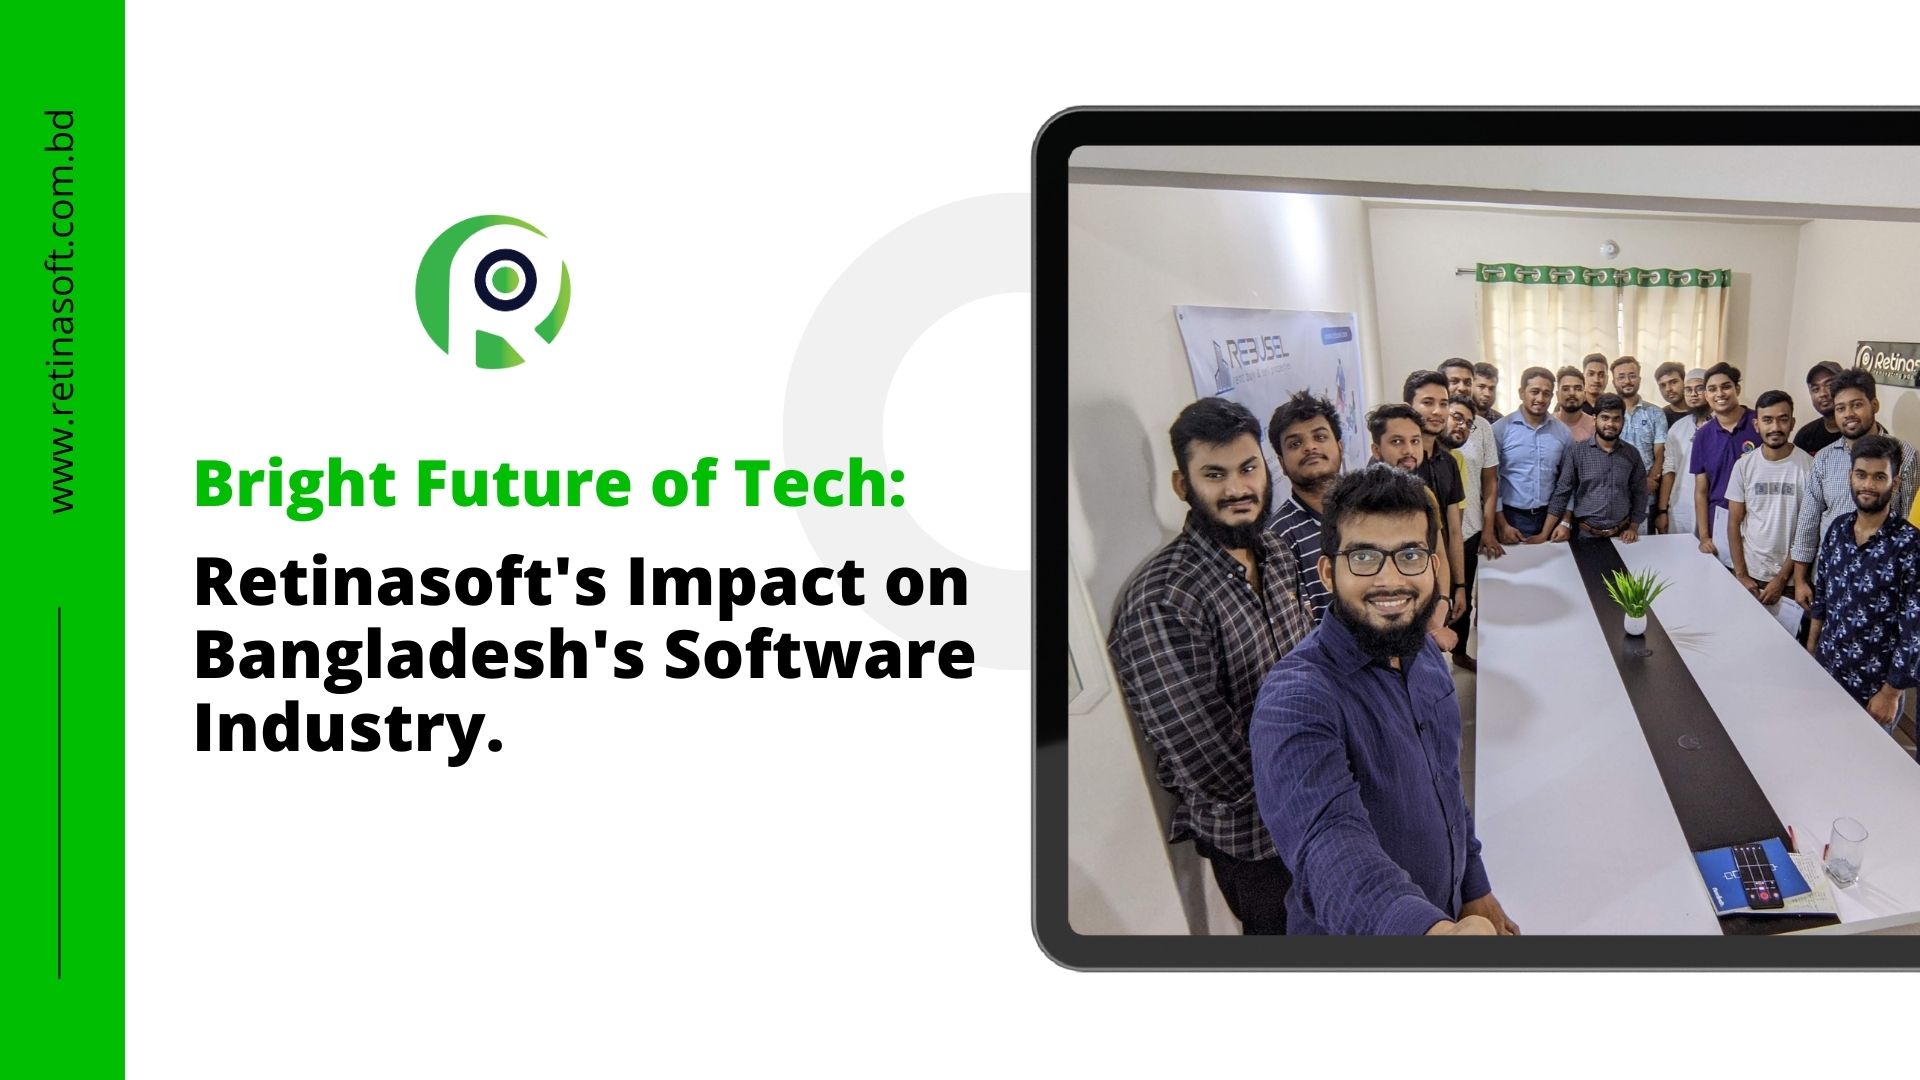 The Bright Future of Tech Retinasoft's Impact on Bangladesh's Software Industry